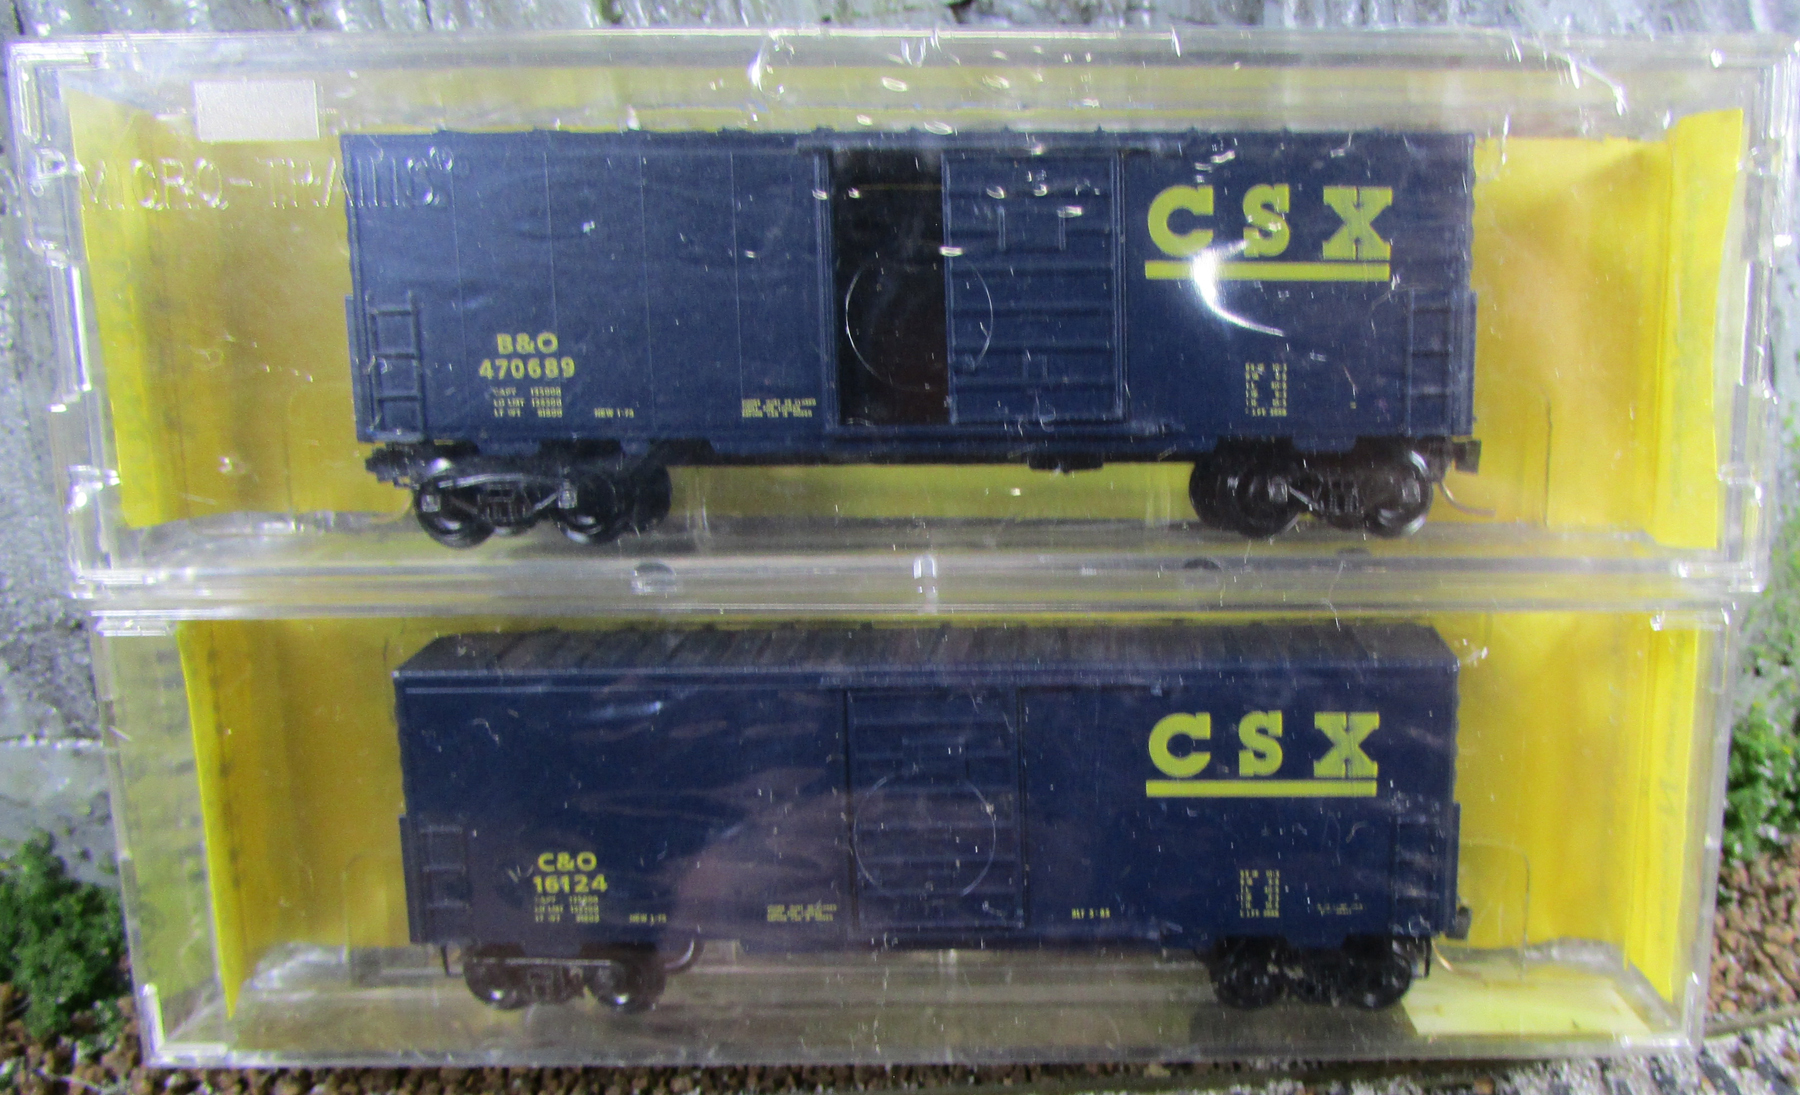 N Scale - Ak-Sar-Ben - 9215 - Boxcar, 40 Foot, PS-1 - CSX Transportation - 470689, 16124